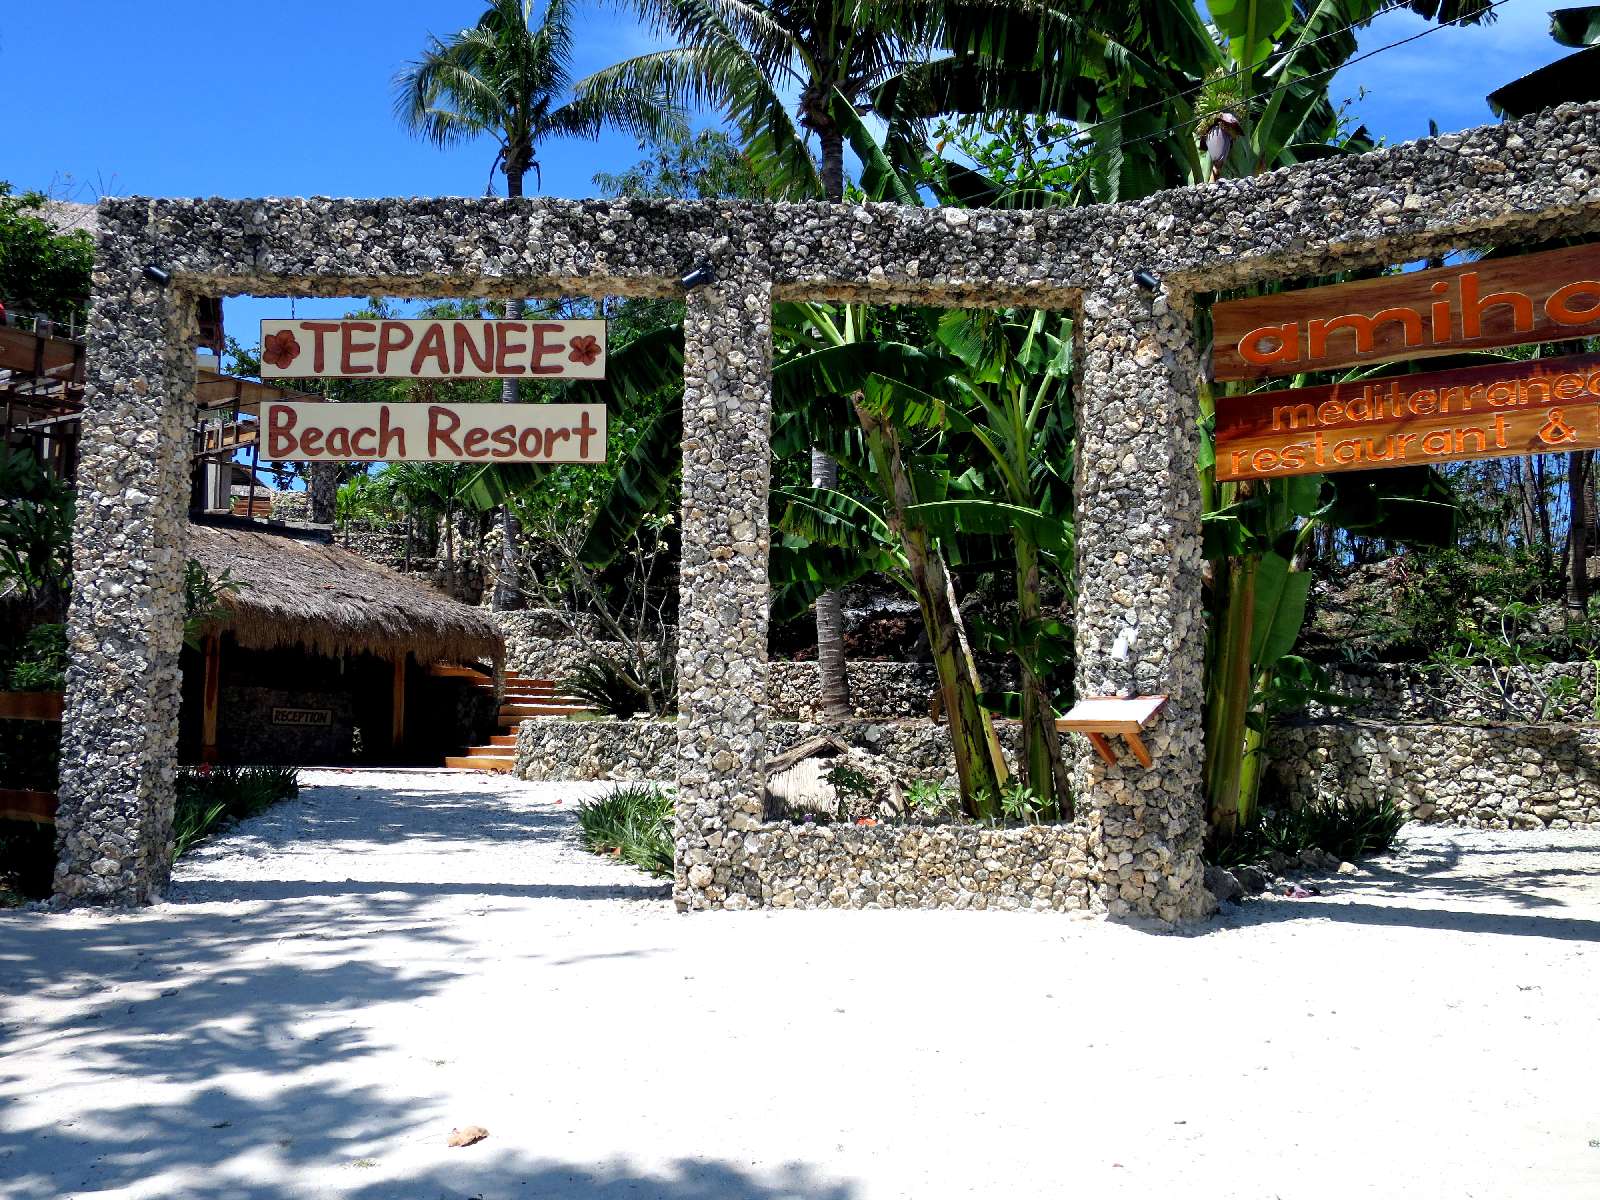 Malapascua – TEPANEE BEACH RESORT entrata.jpg